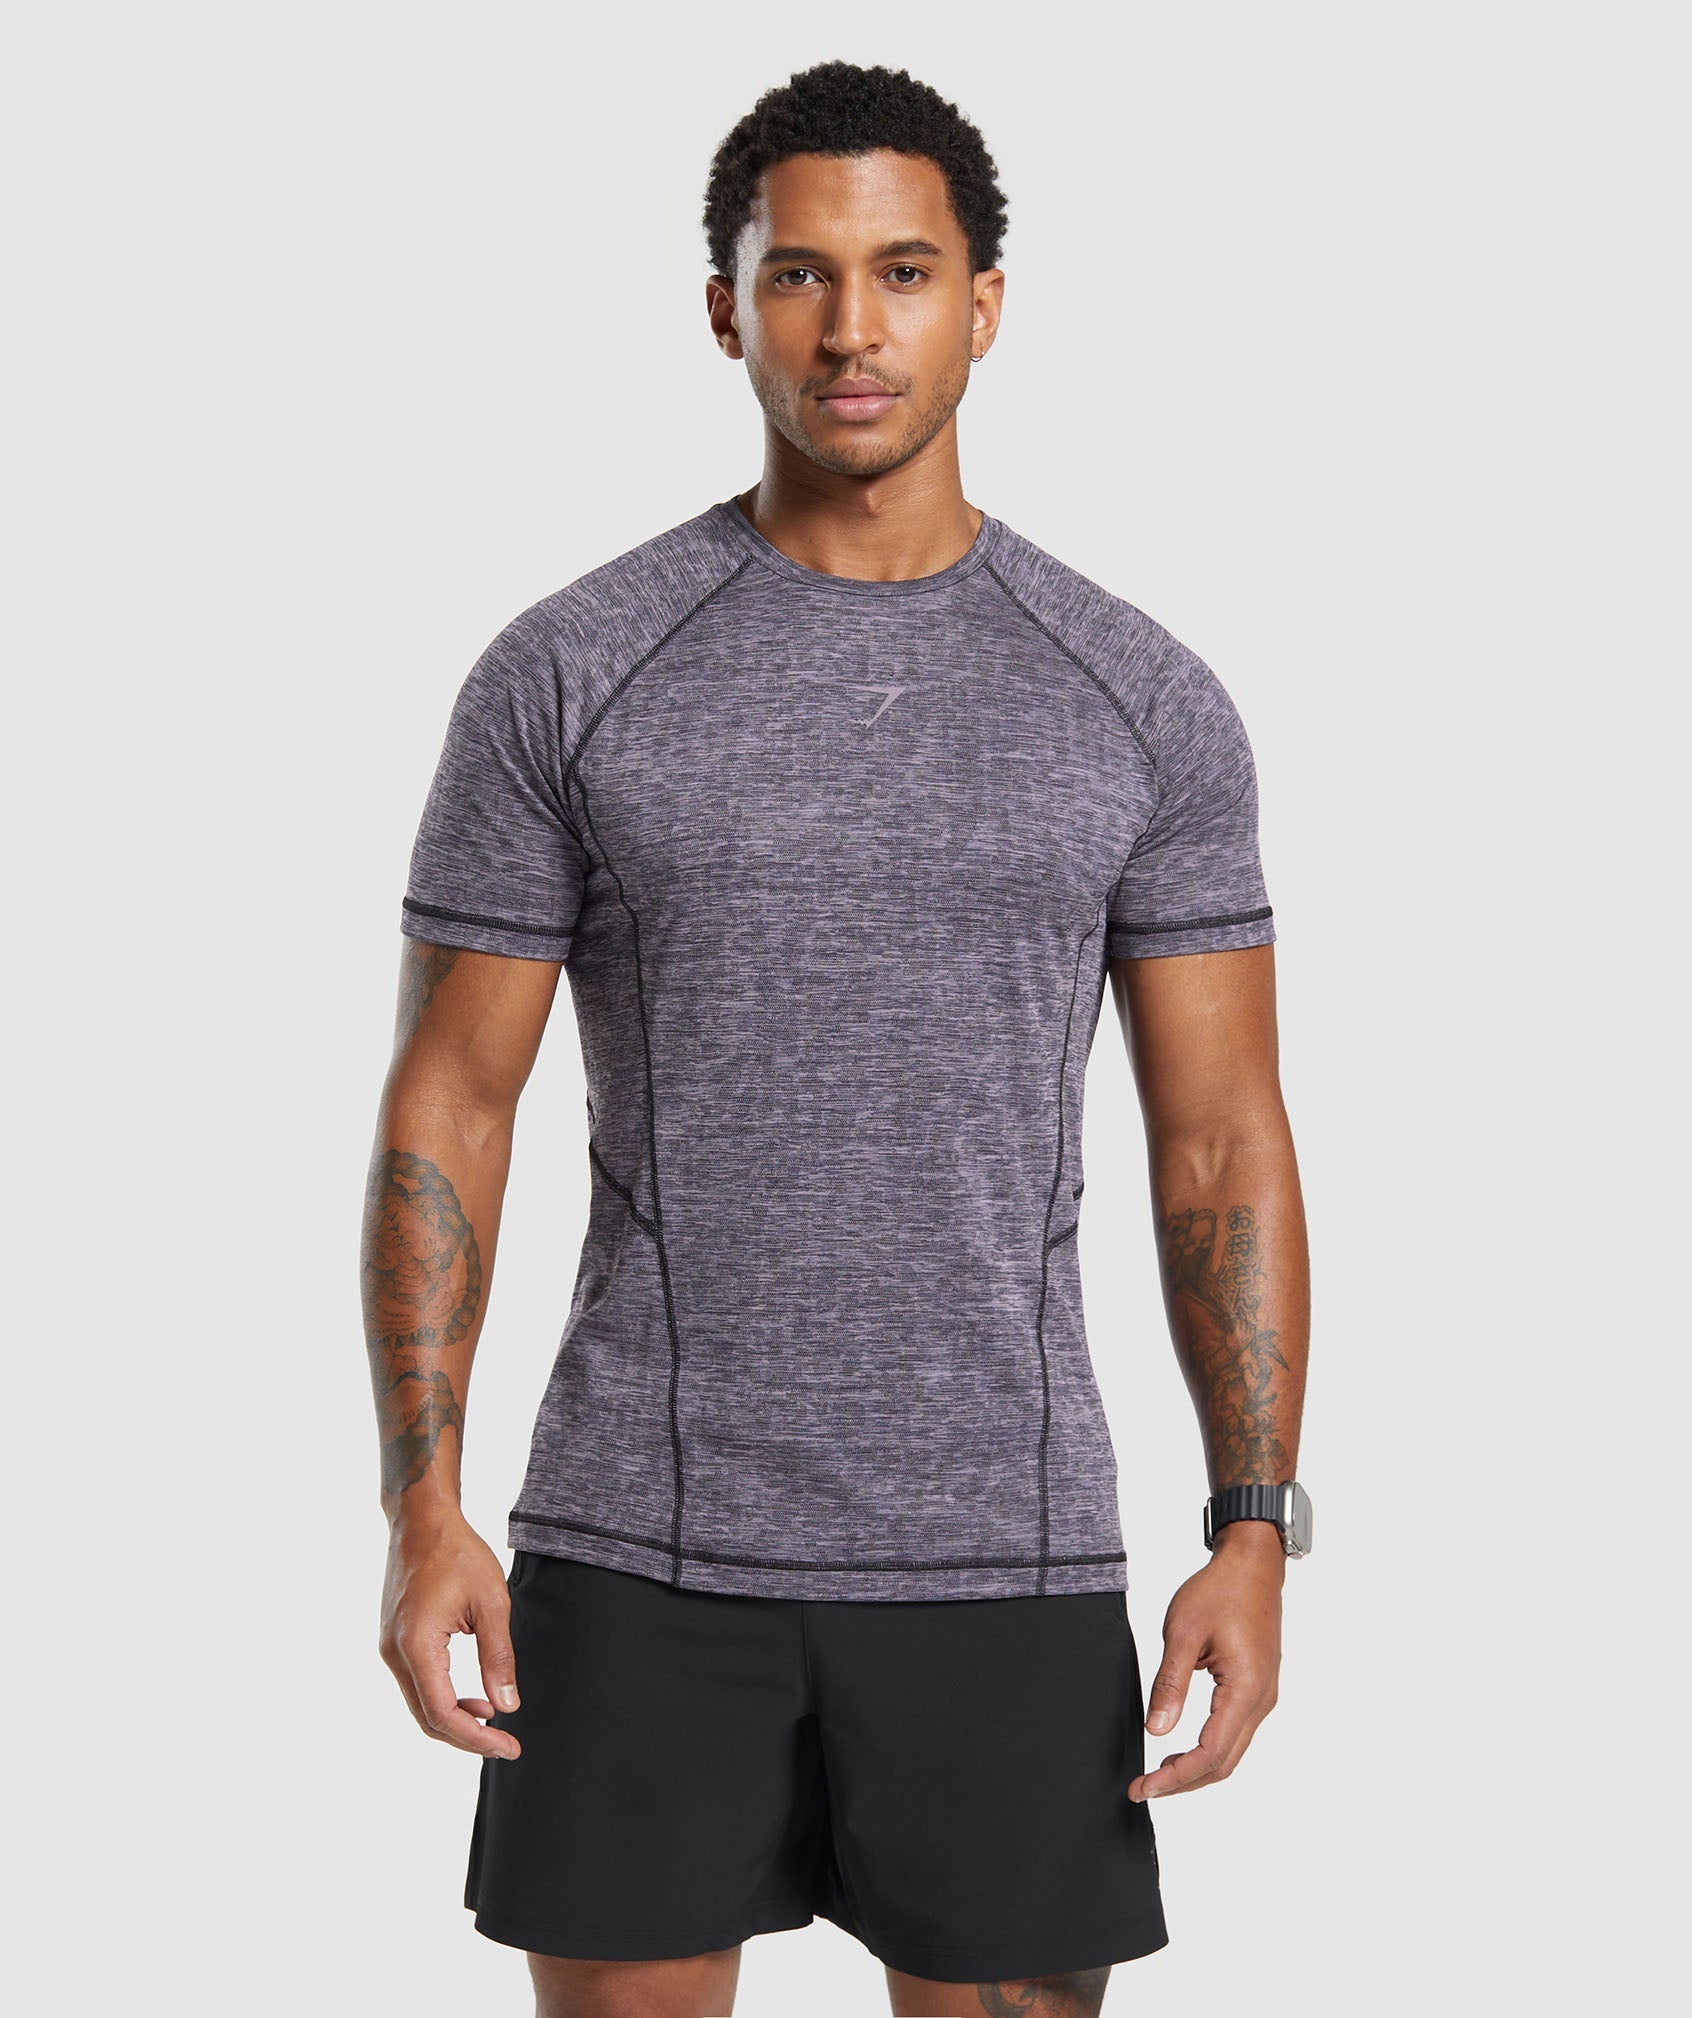 Apex T-Shirt in Fog Purple/Black